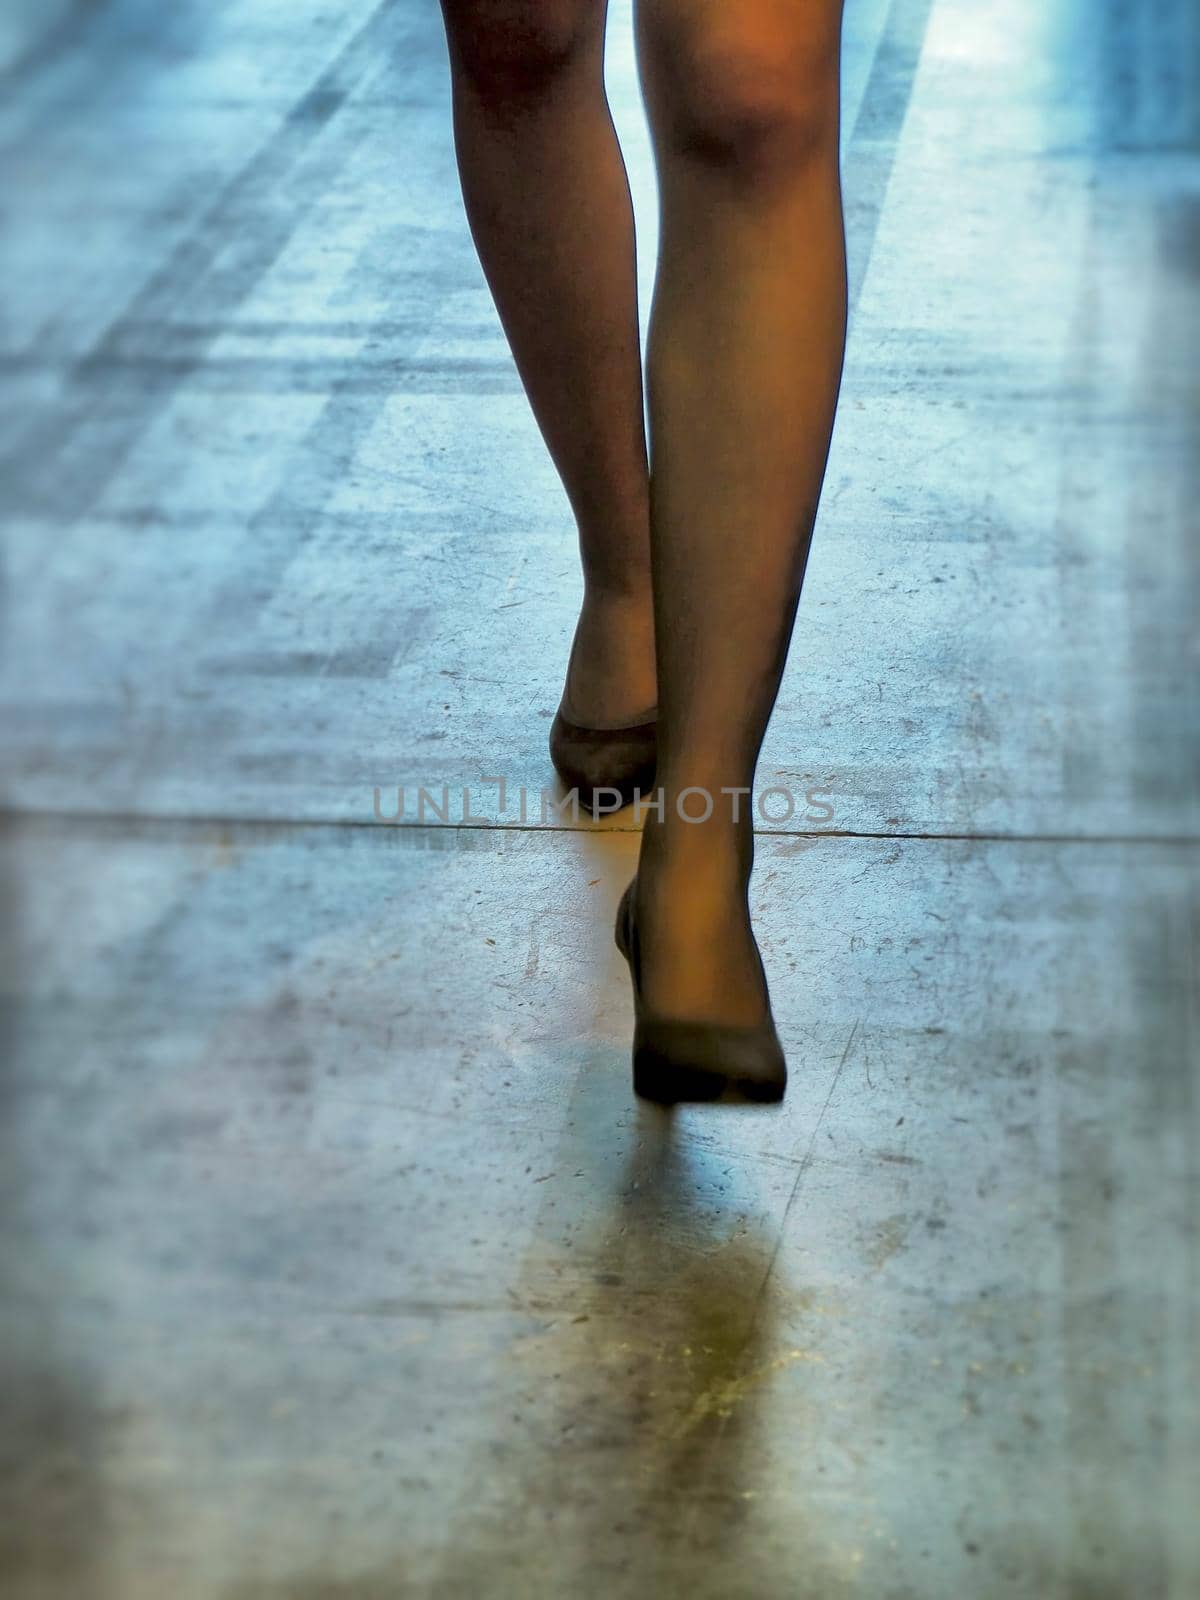 Close up of female legs steps wearing high heels elegant shoes on concrete floor